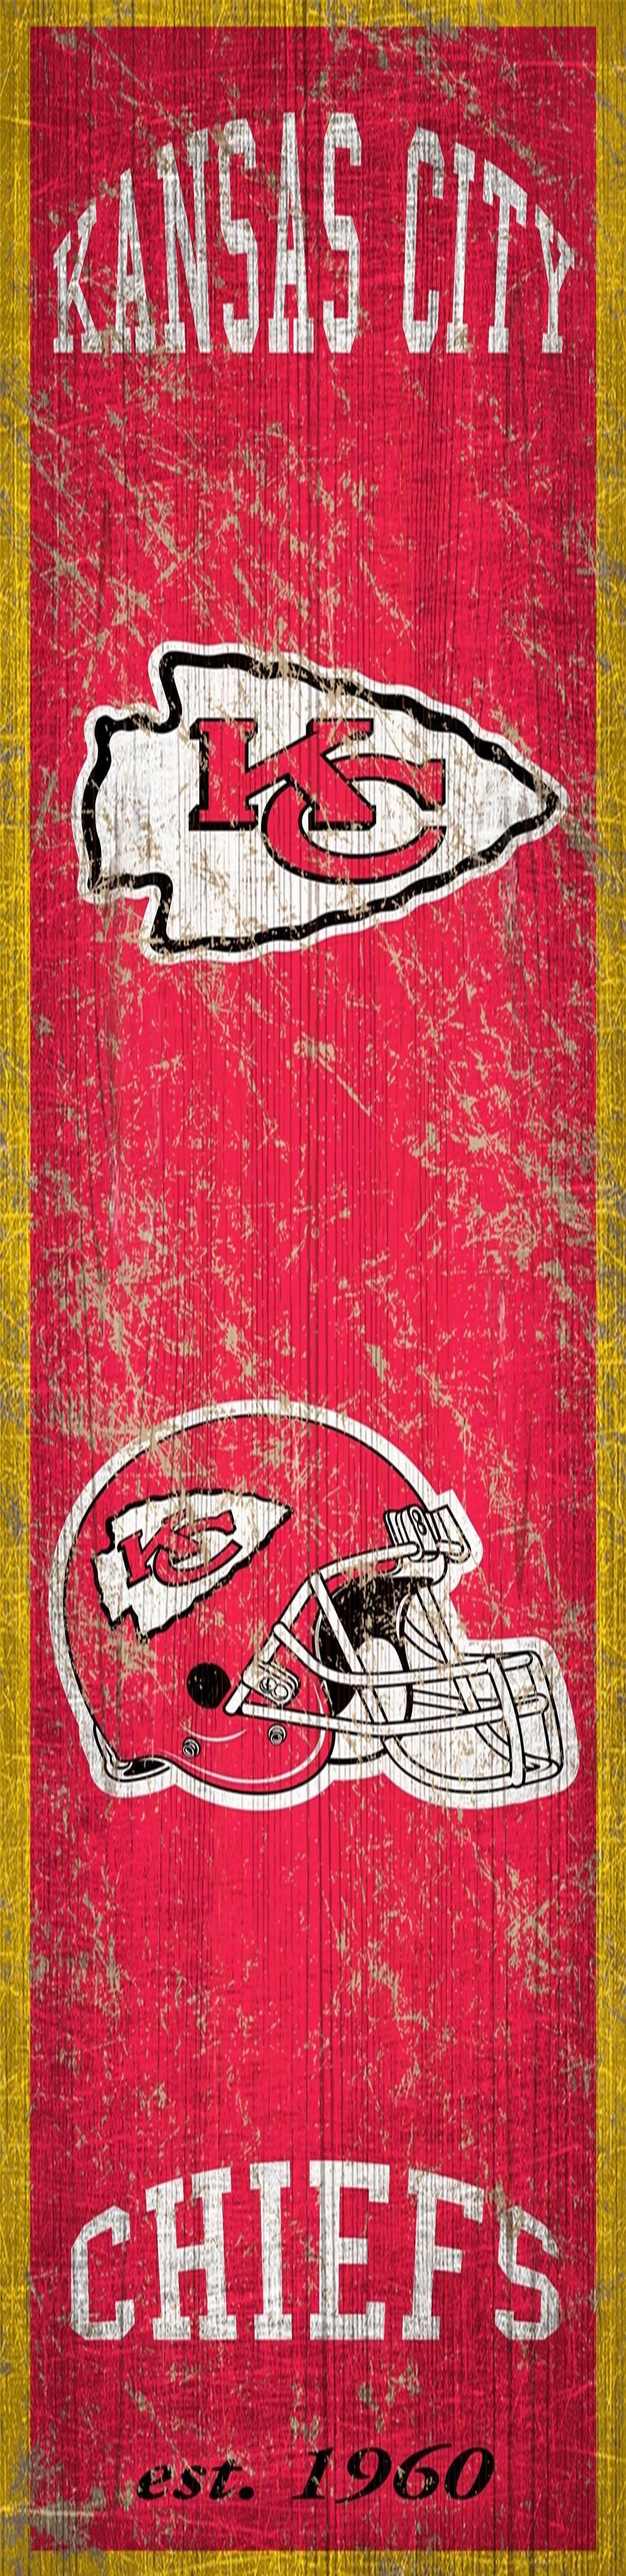 Kansas City Chiefs Heritage Banner Vertical Sign - 6